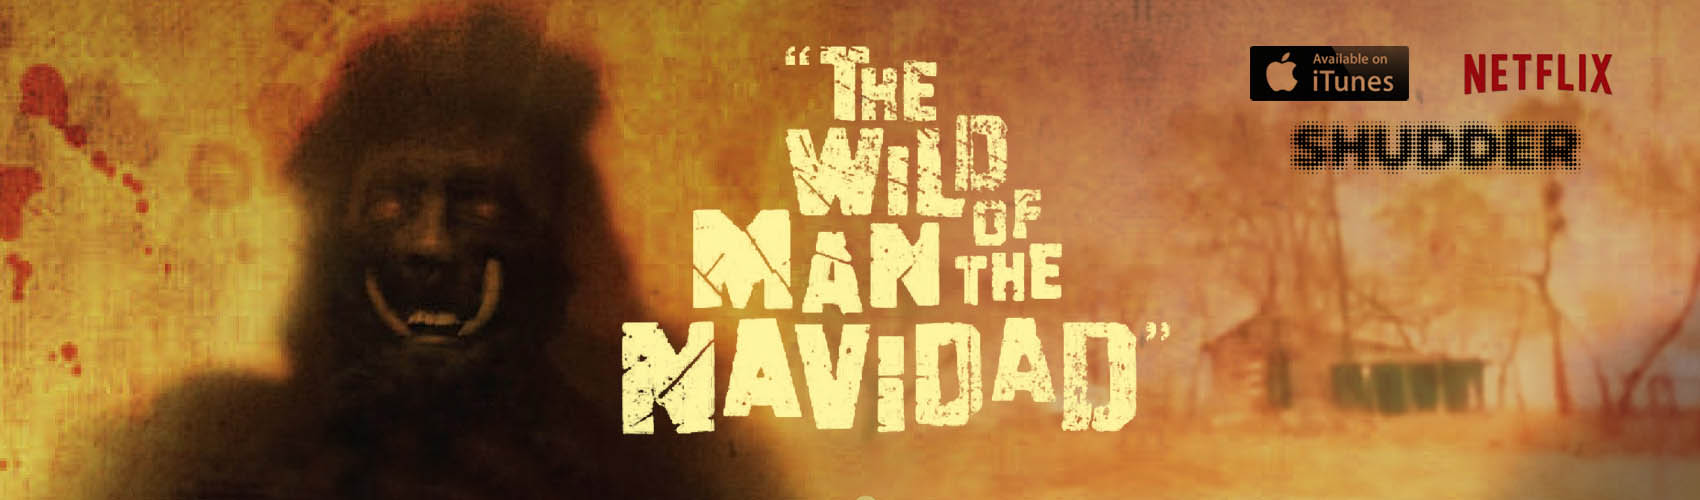 wildman of the navidad